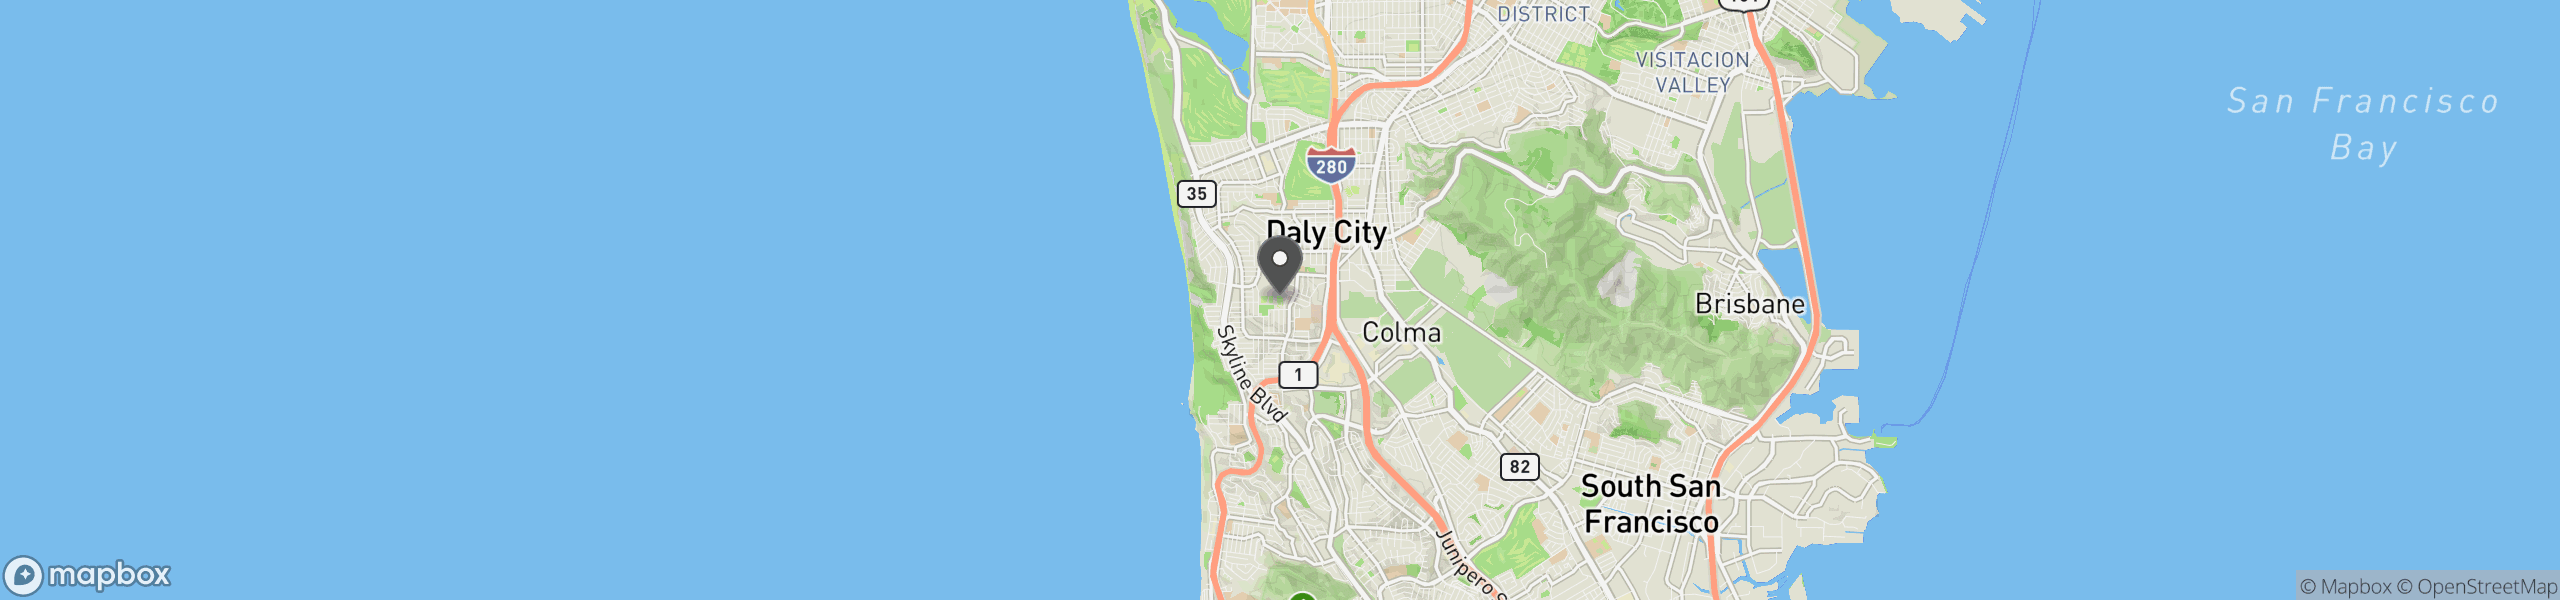 Daly City, CA 94015